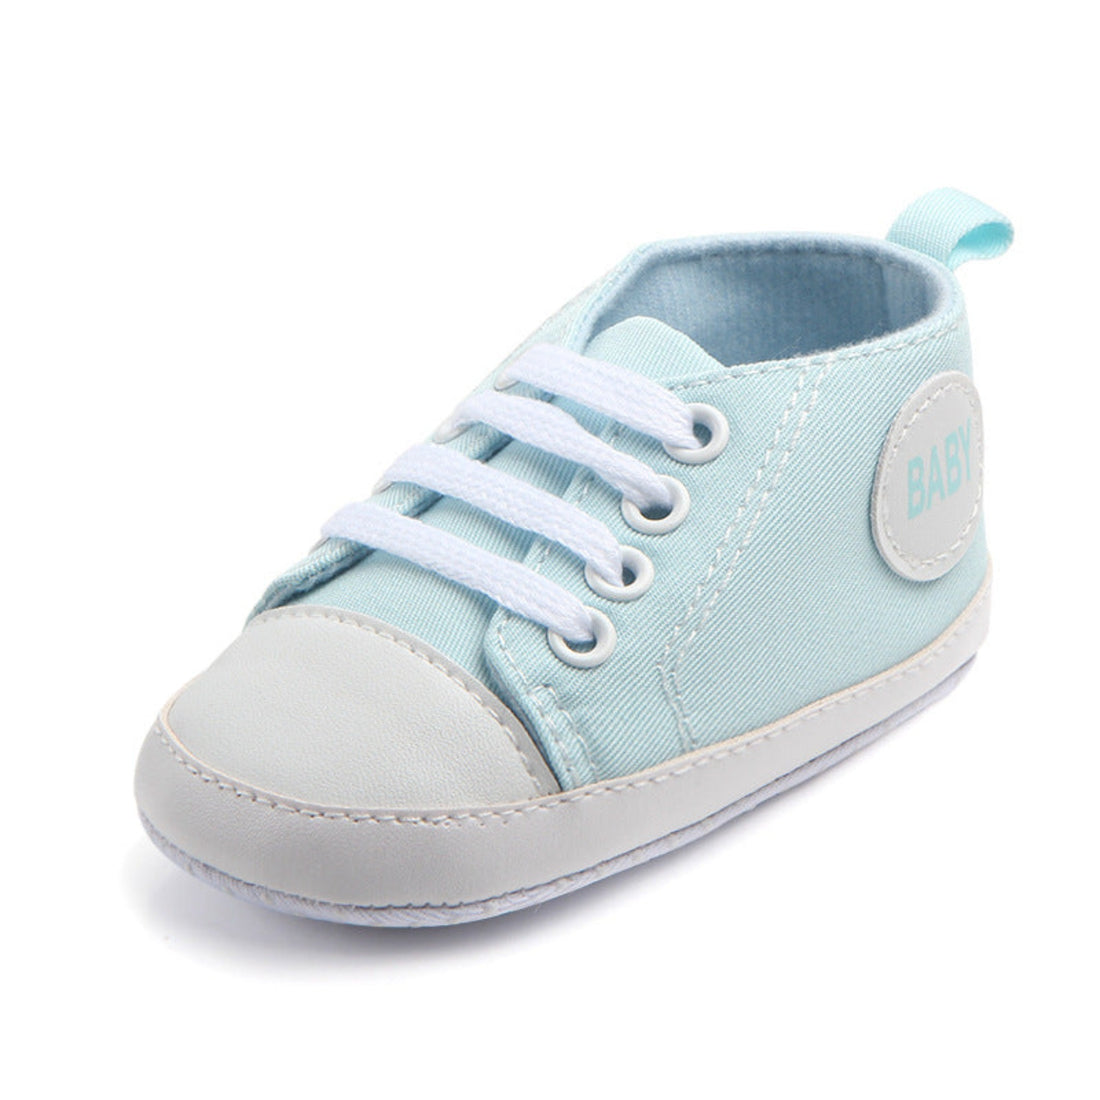 Anti-slip baby sneakers in light blue